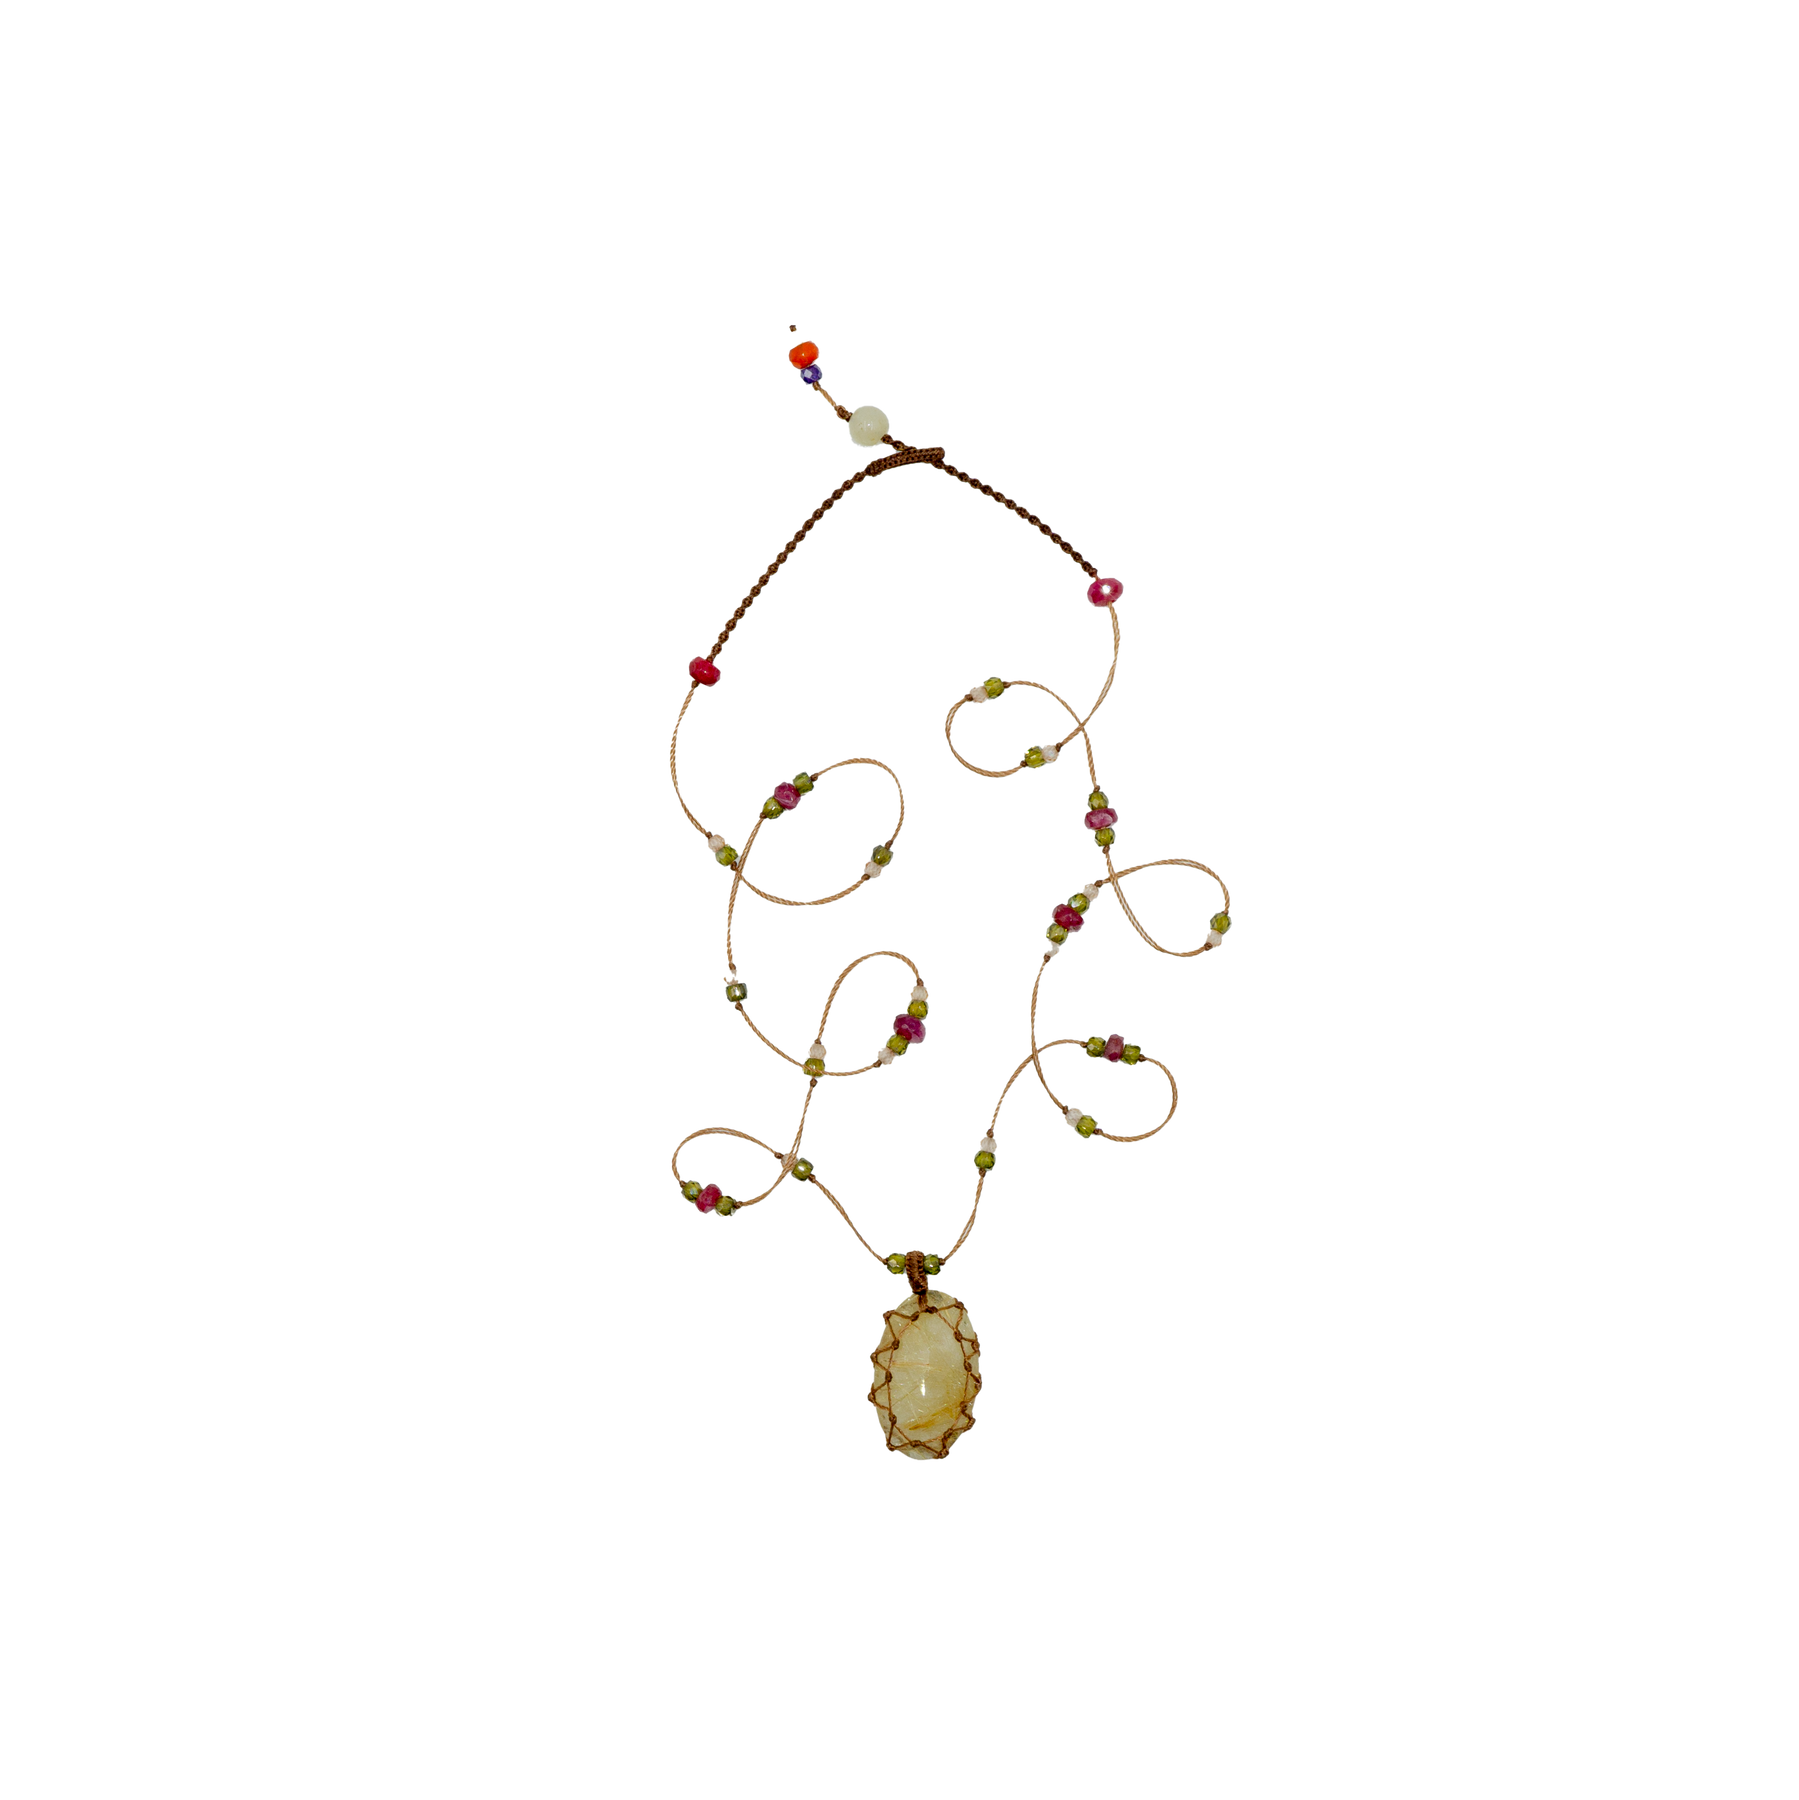 Tibetan Short Necklace - Gold Rutile Quartz - Mix Pink Tourmaline - Tobacco Thread